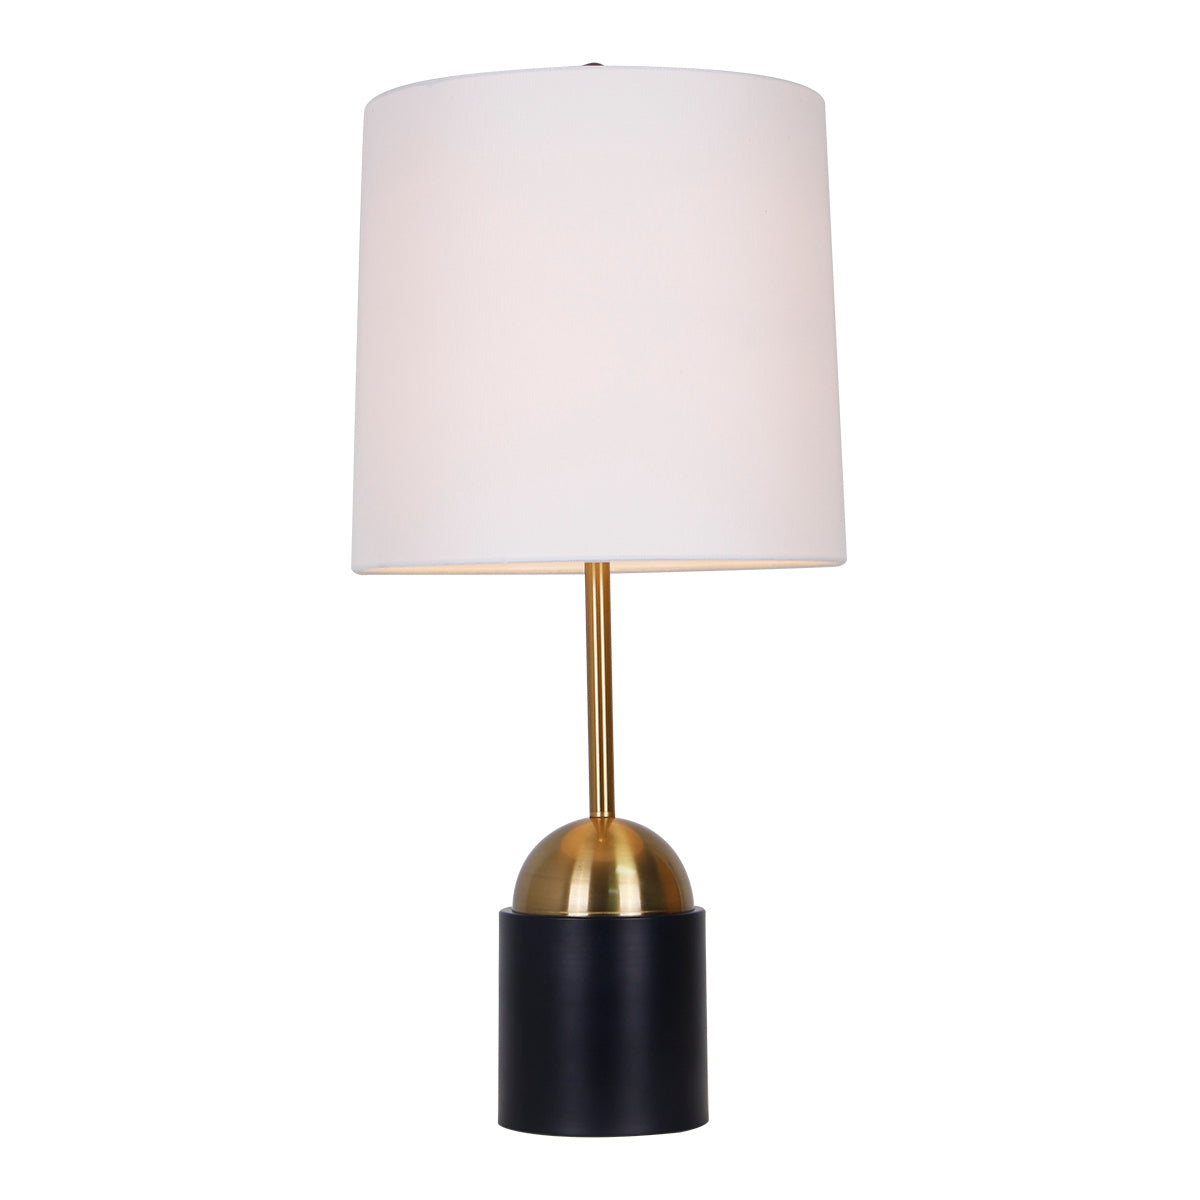 Nico 29" Table Lamp